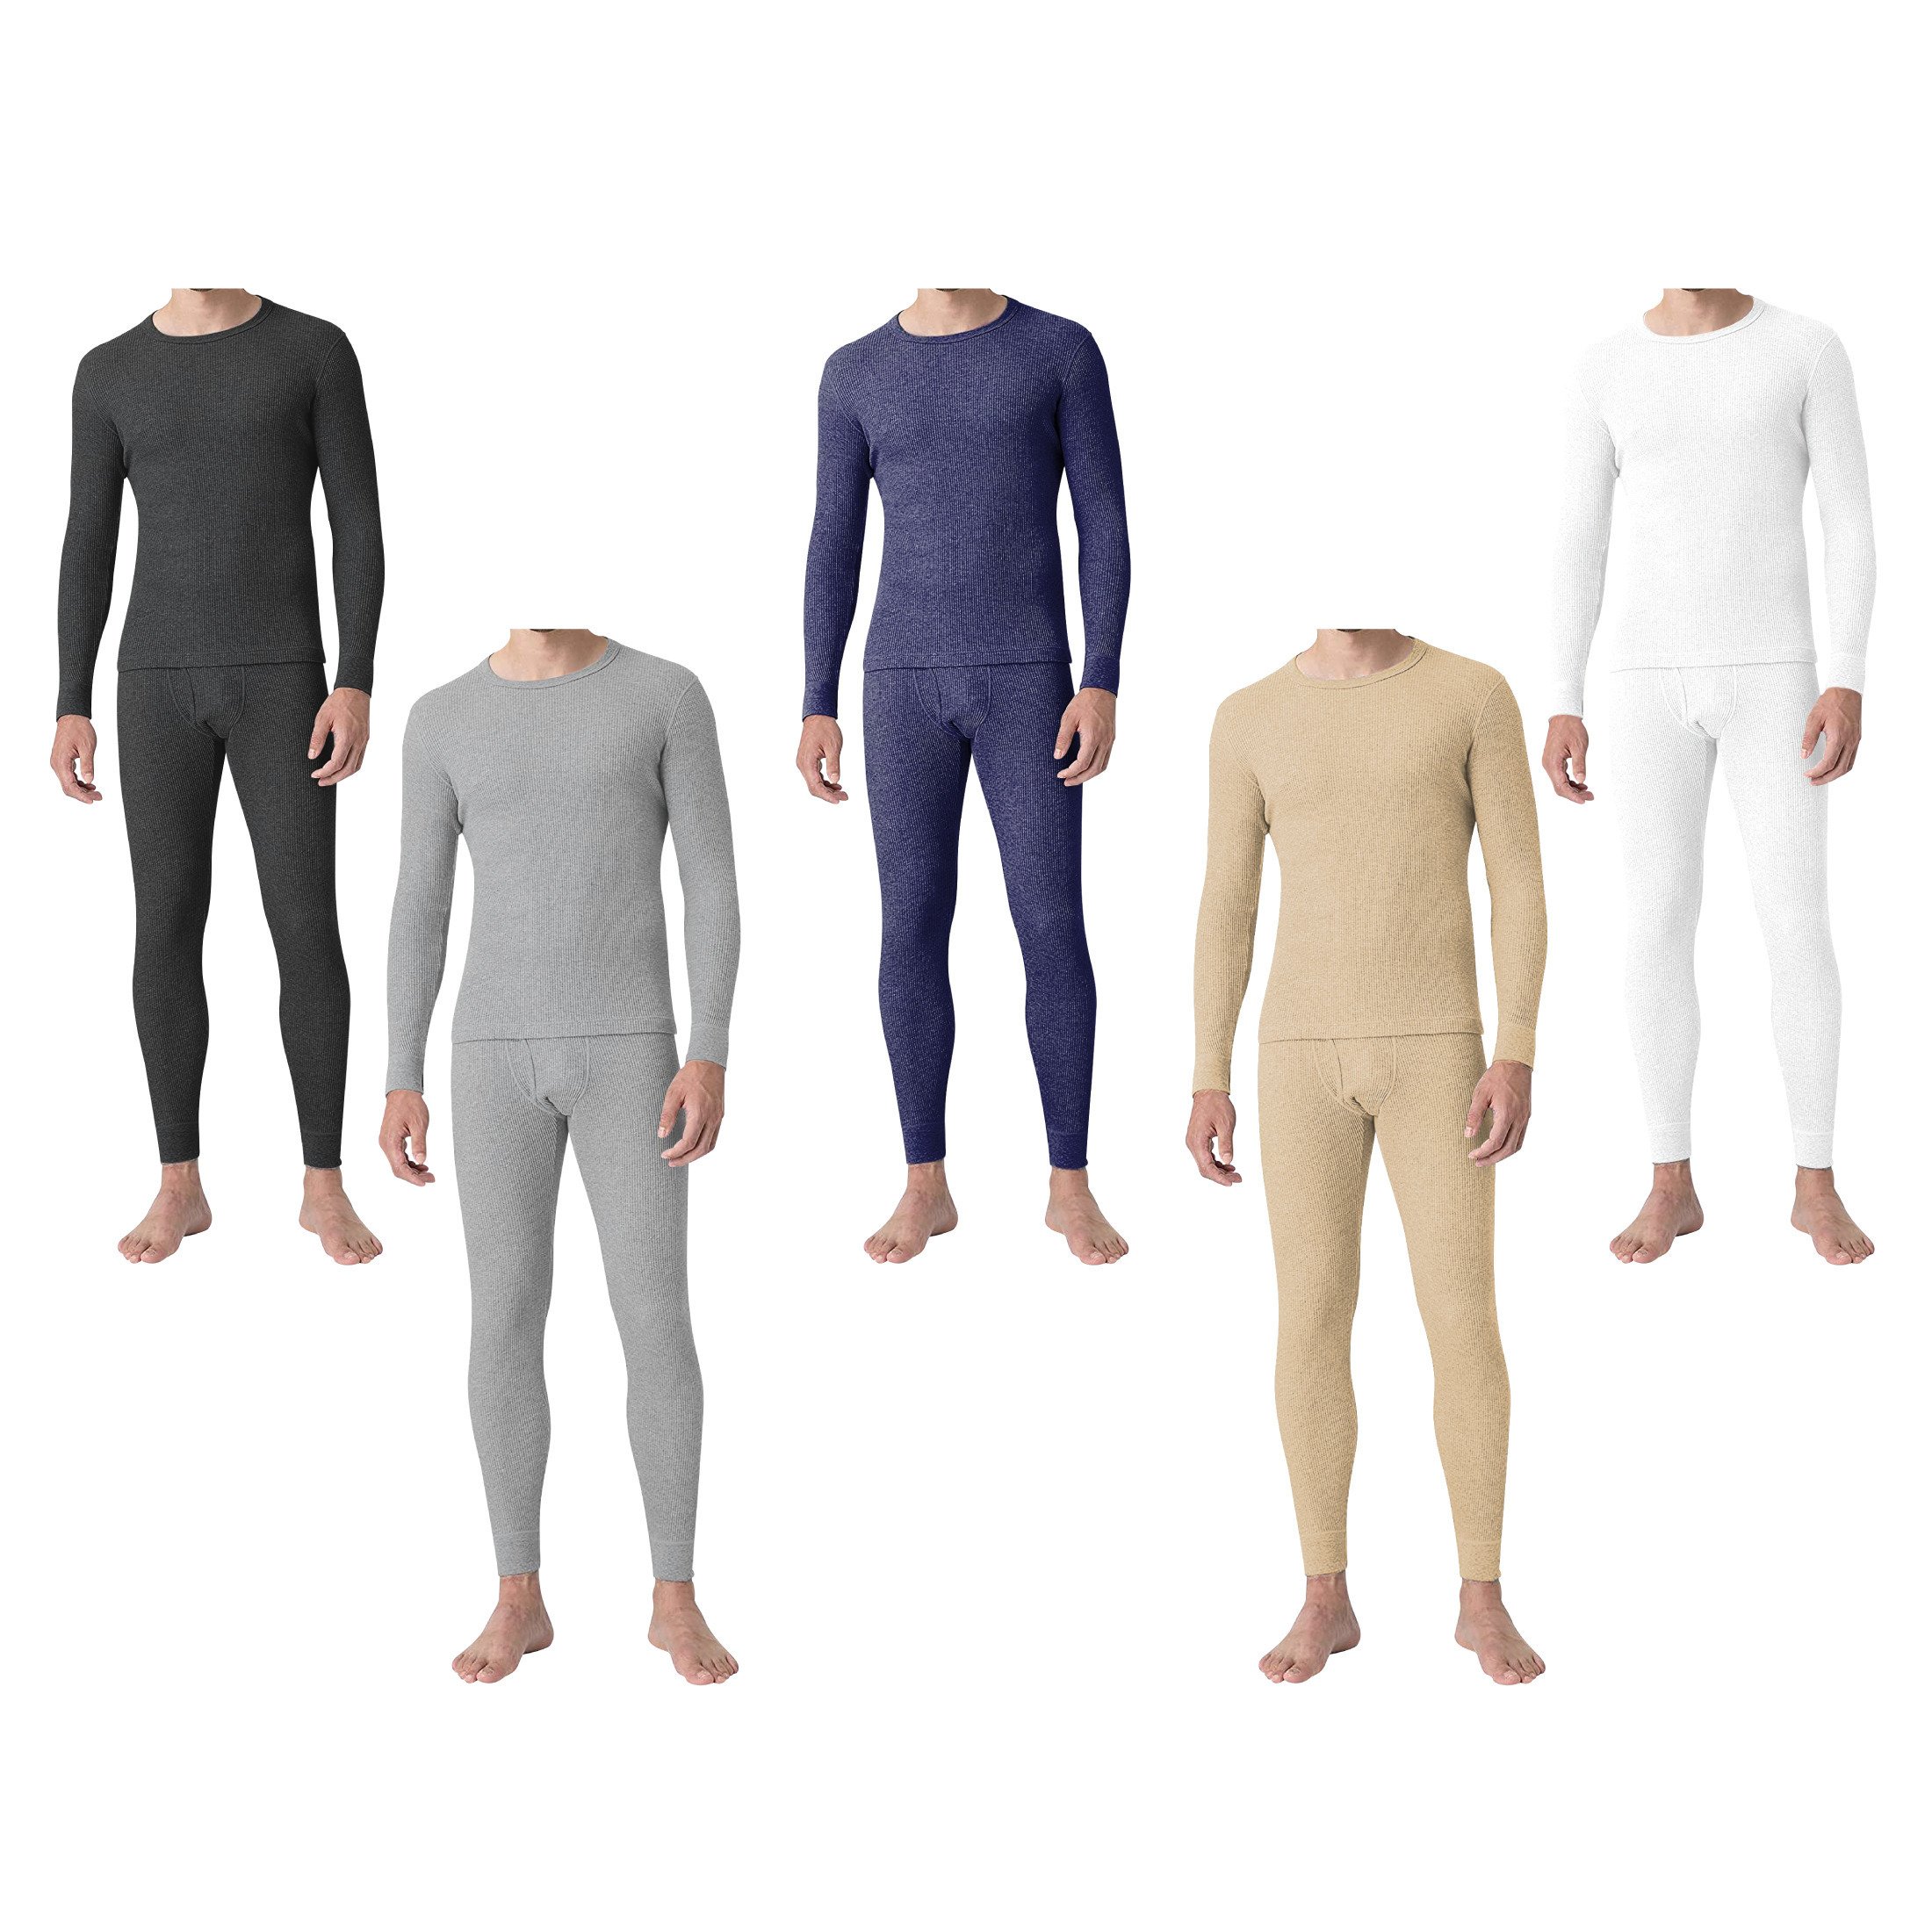 2-Sets: Men's Super Soft Cotton Waffle Knit Winter Thermal Underwear Set - Black & Grey, Large